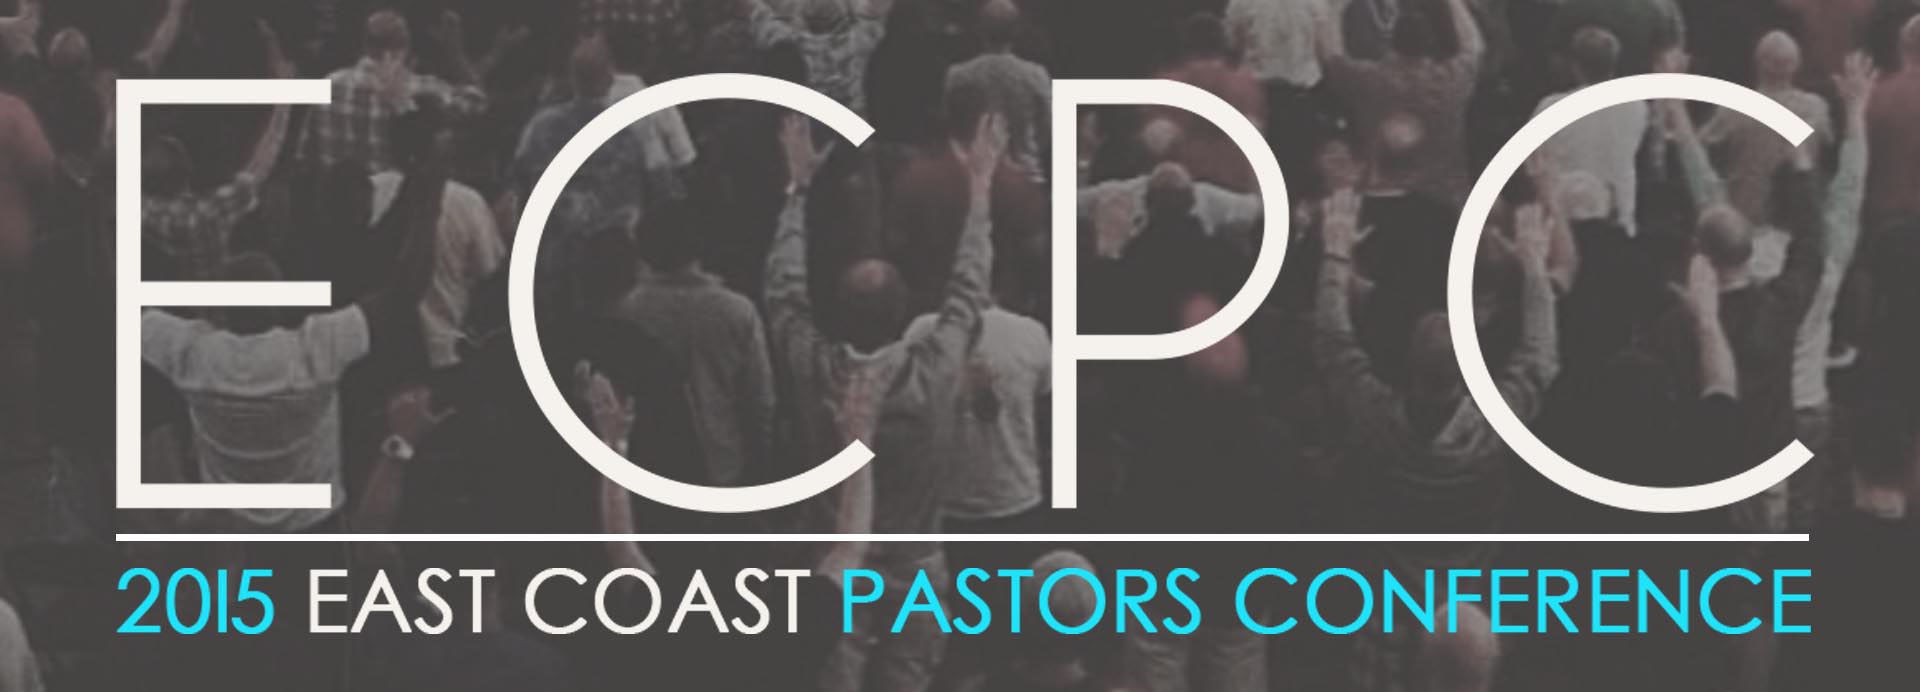 East Coast Pastors Conference 2015